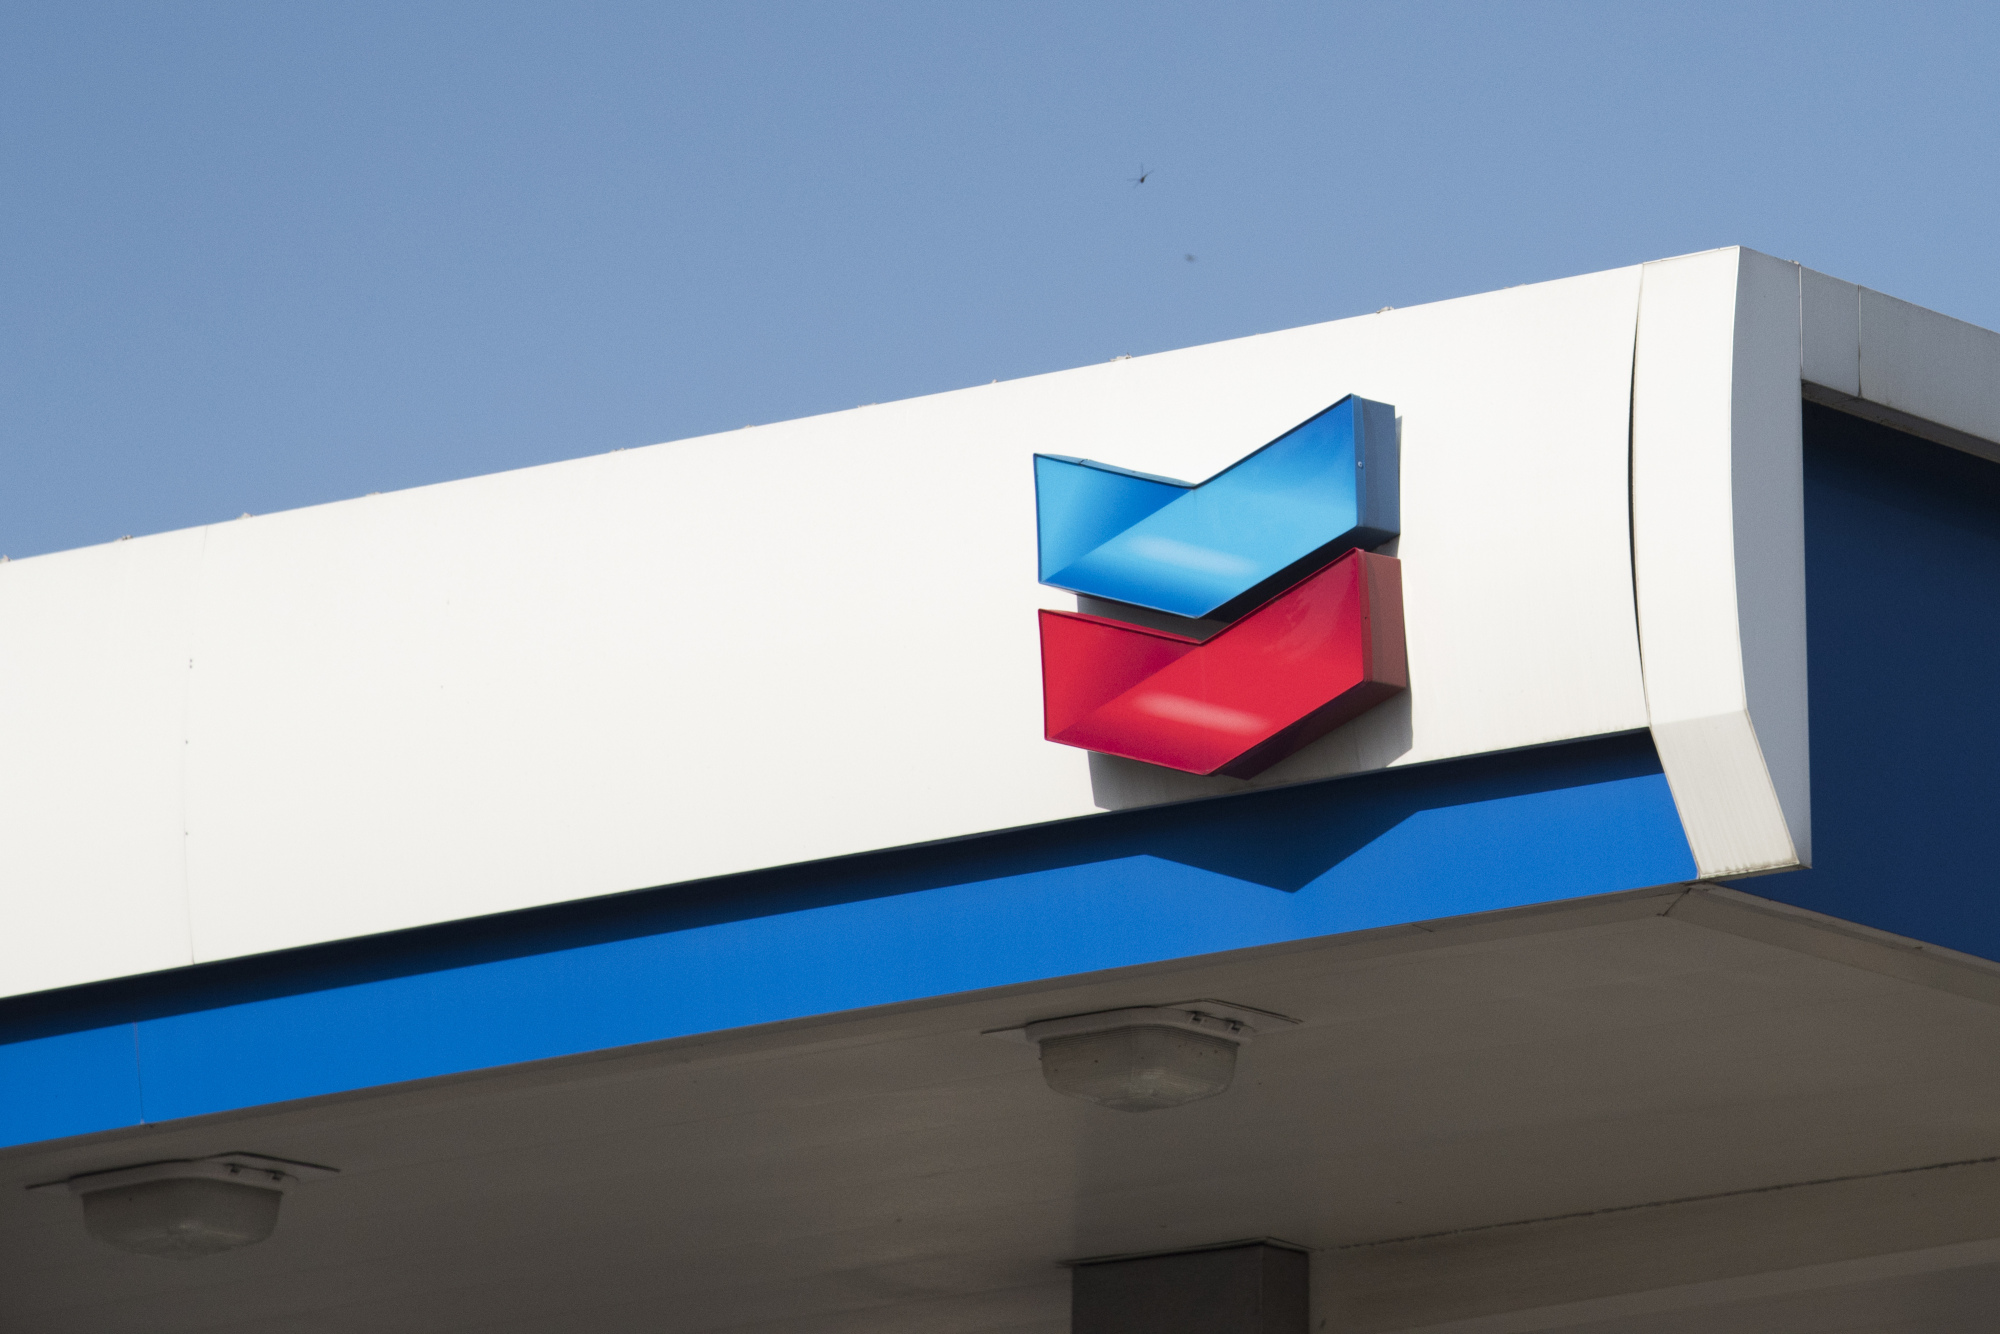 chevron gas station logo